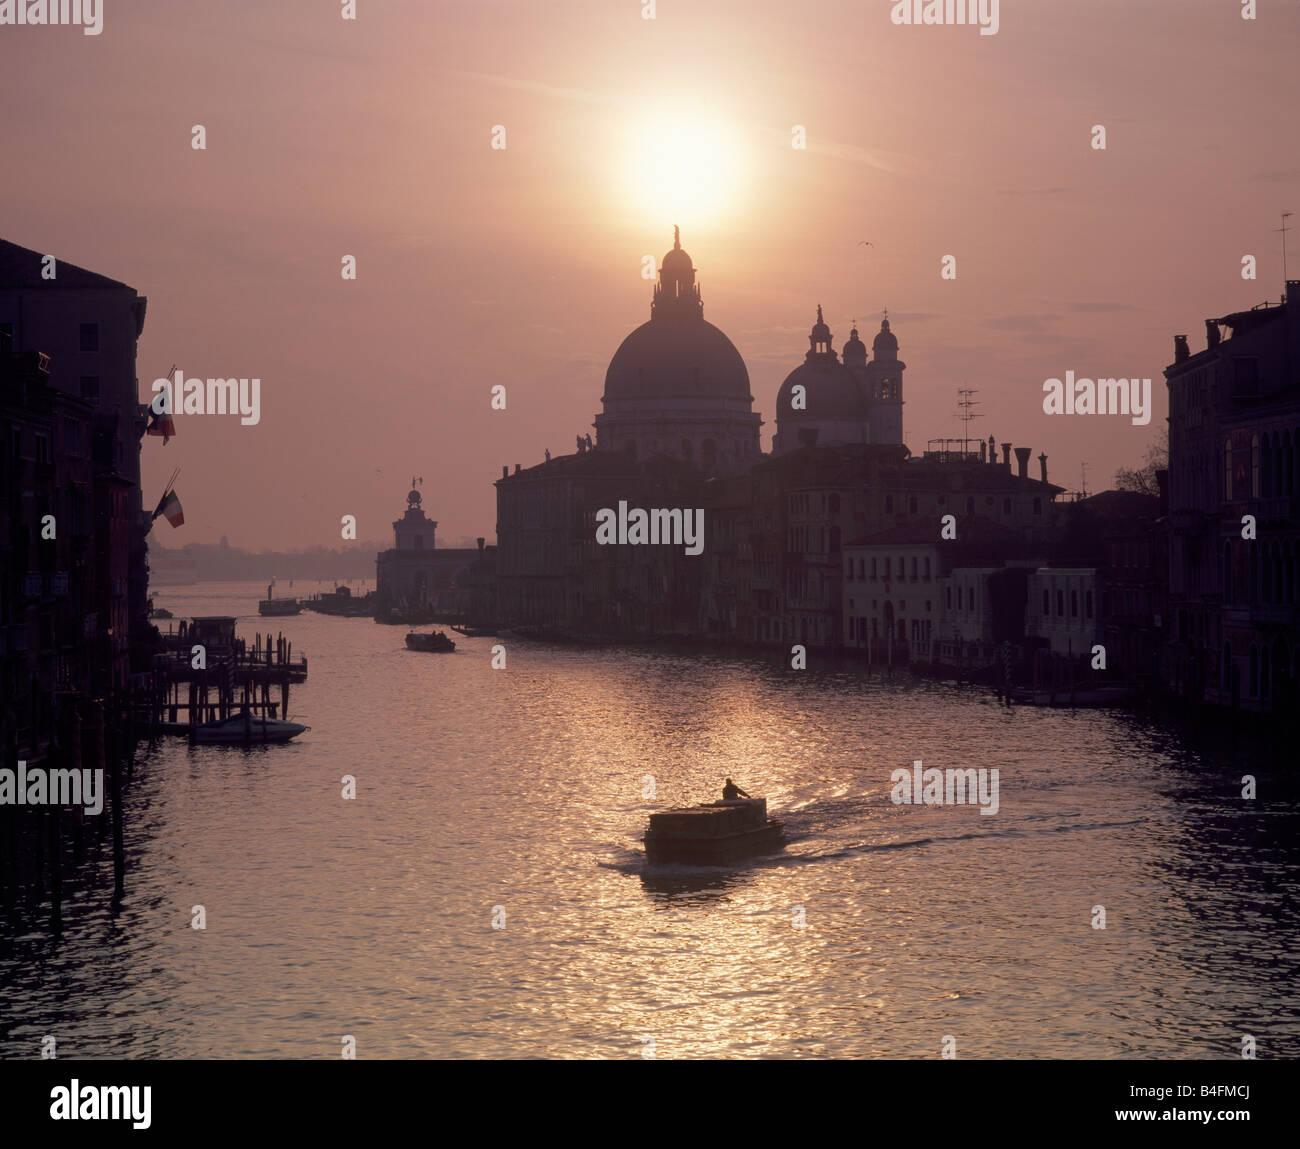 Venecia Gran canal y la iglesia de Santa Maria della Salute a través de un amanecer brumoso. Foto de stock